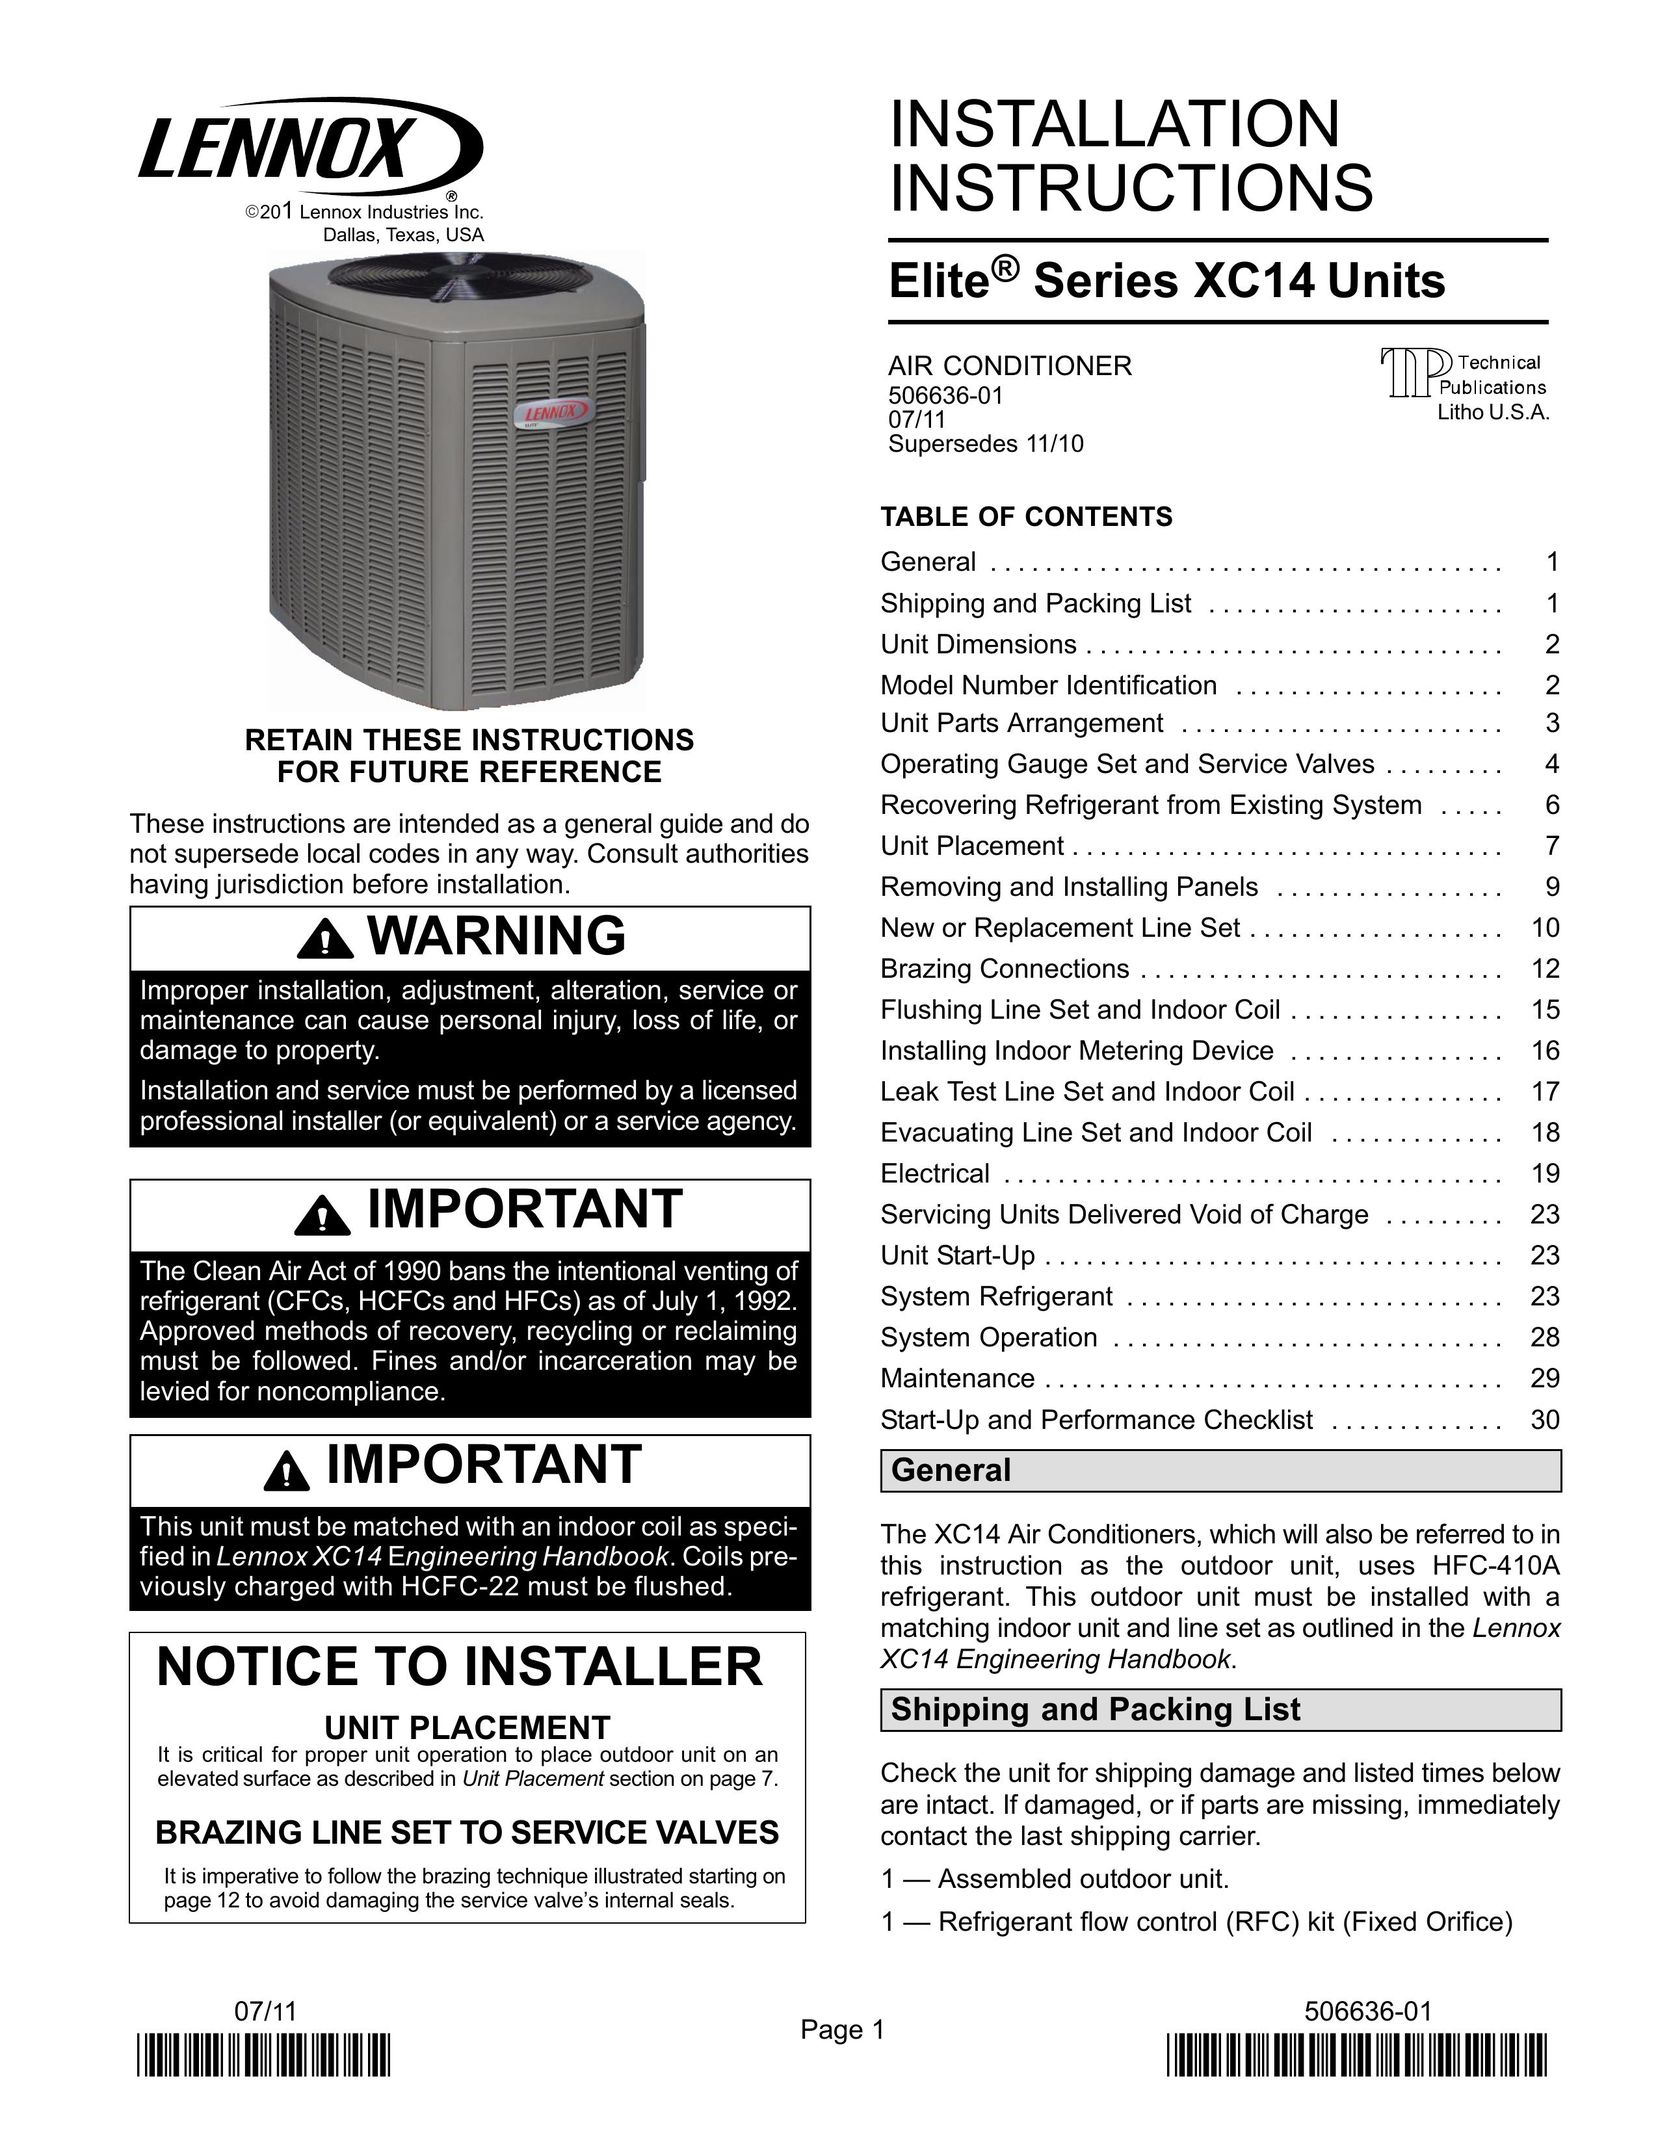 Lenox XC14 Air Conditioner User Manual